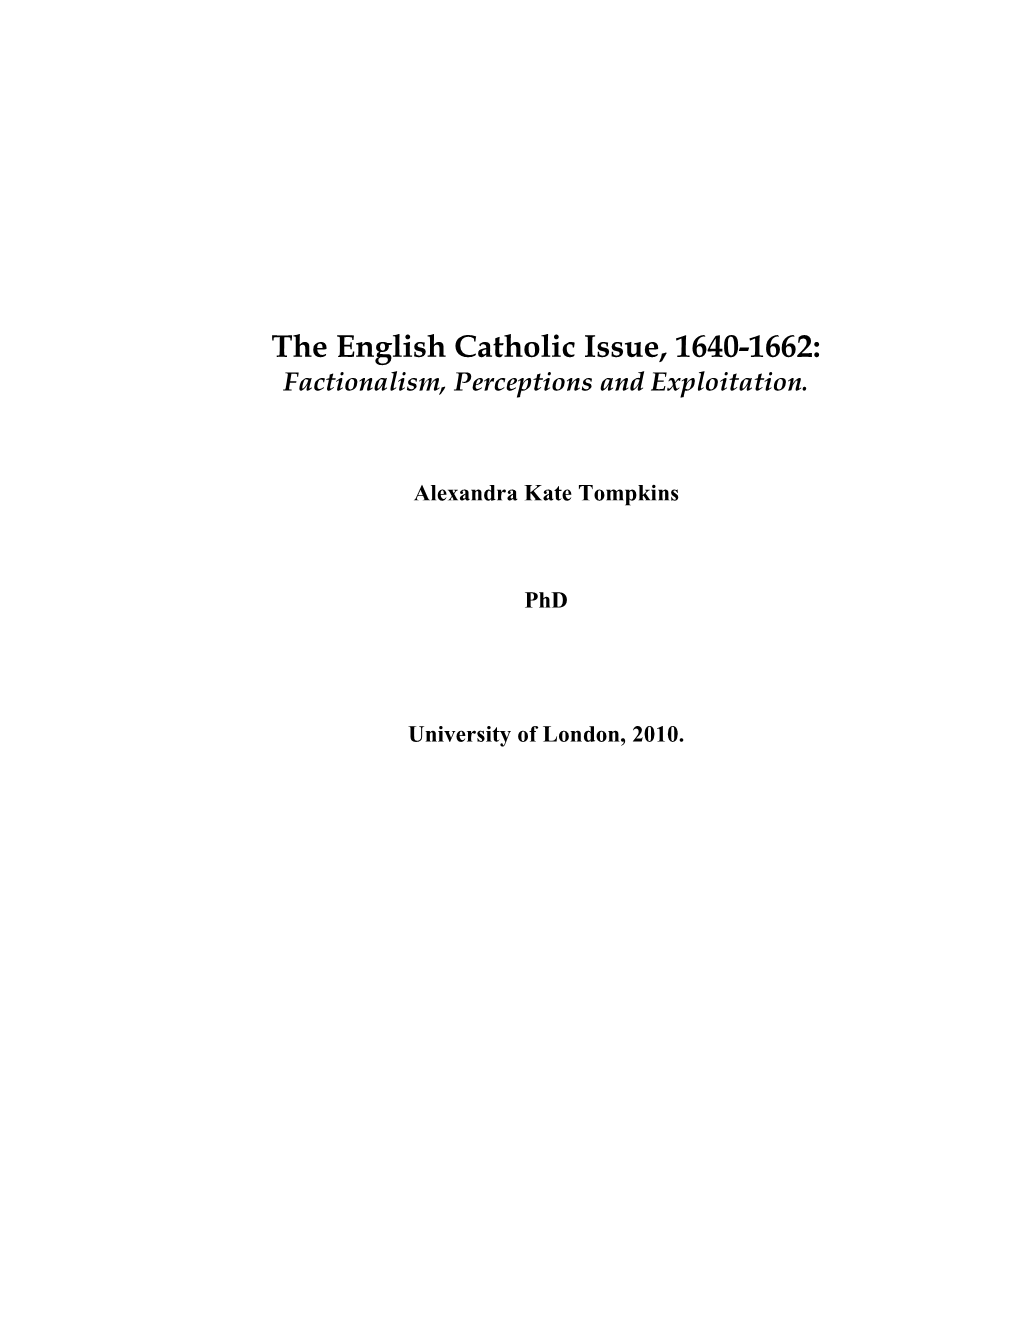 A.Tompkins, the English Catholic Issue, 1640-1662